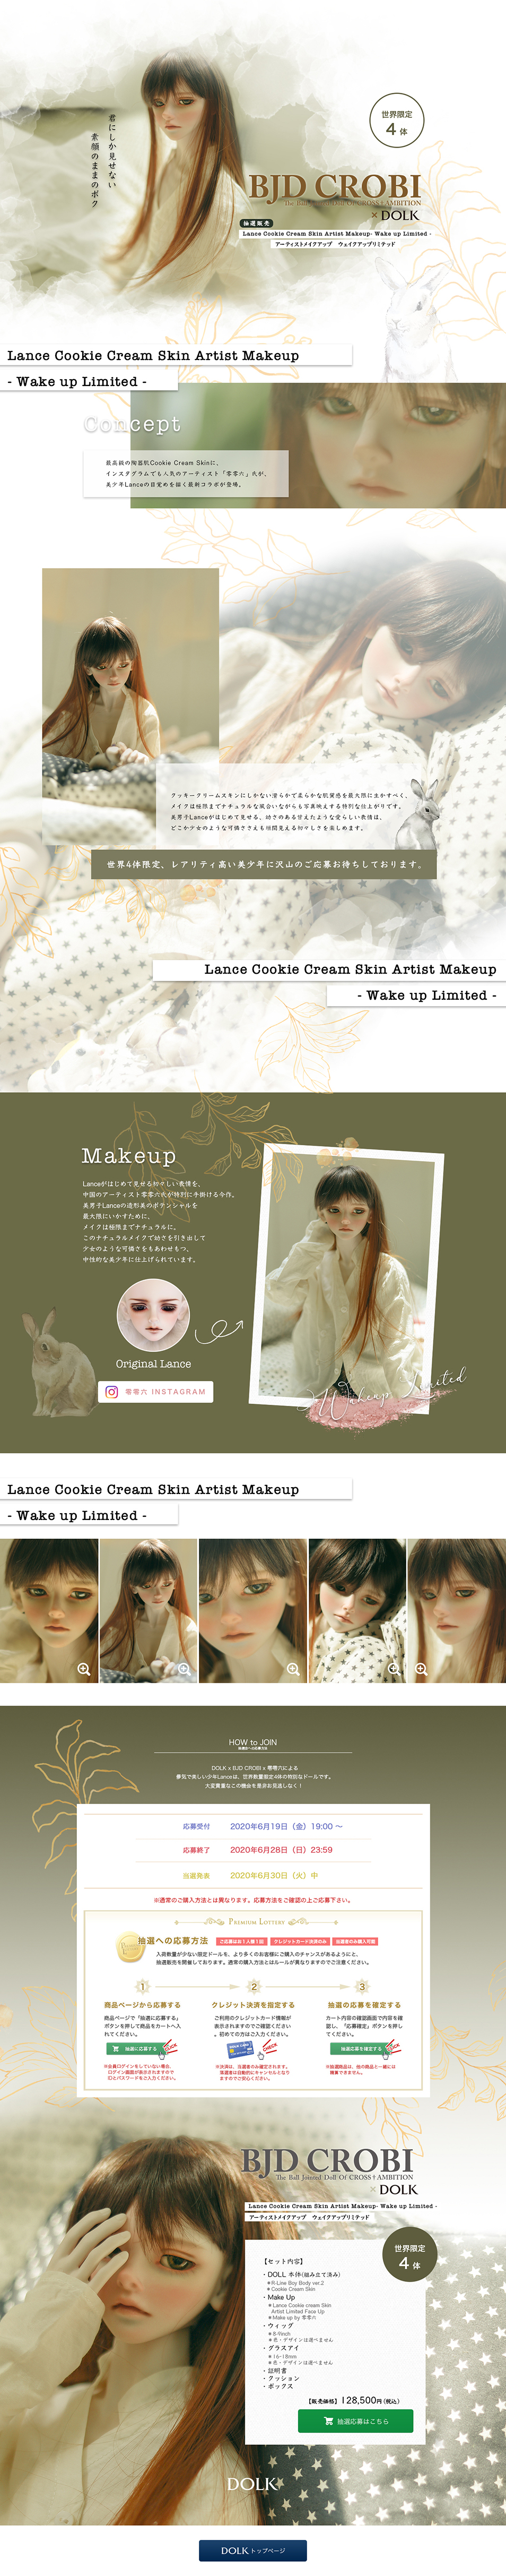 DOLK×BJD CROBI Lance Cookie Cream Skin Artist Makeup_pc_1